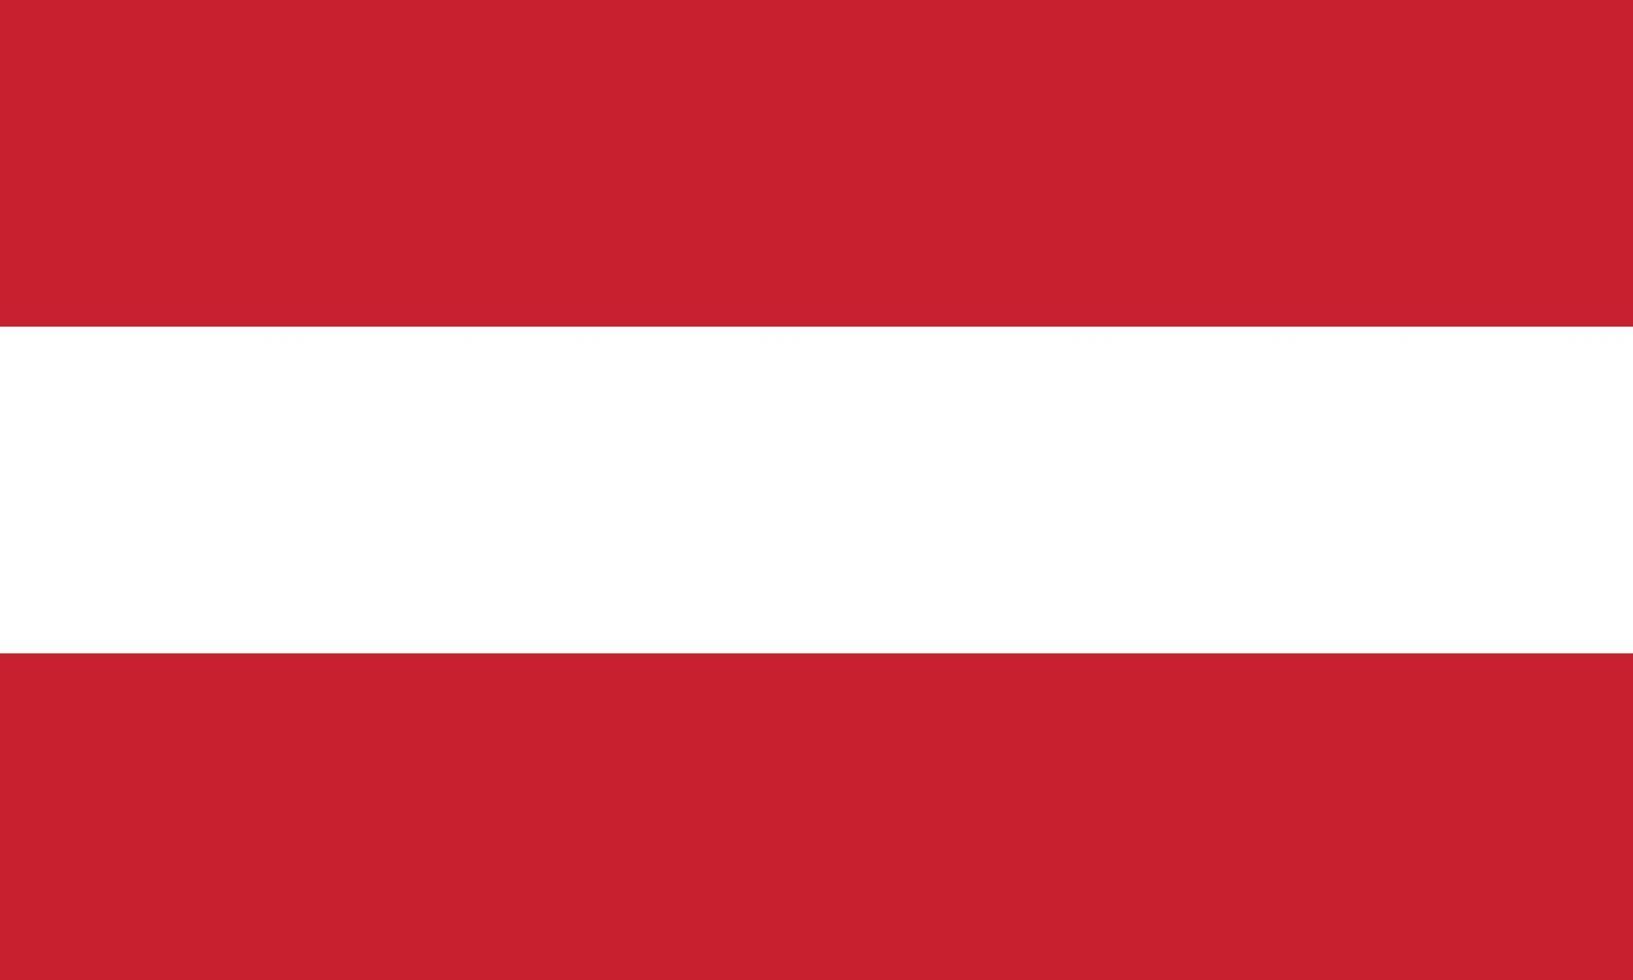 The national flag of Austria vector illustration